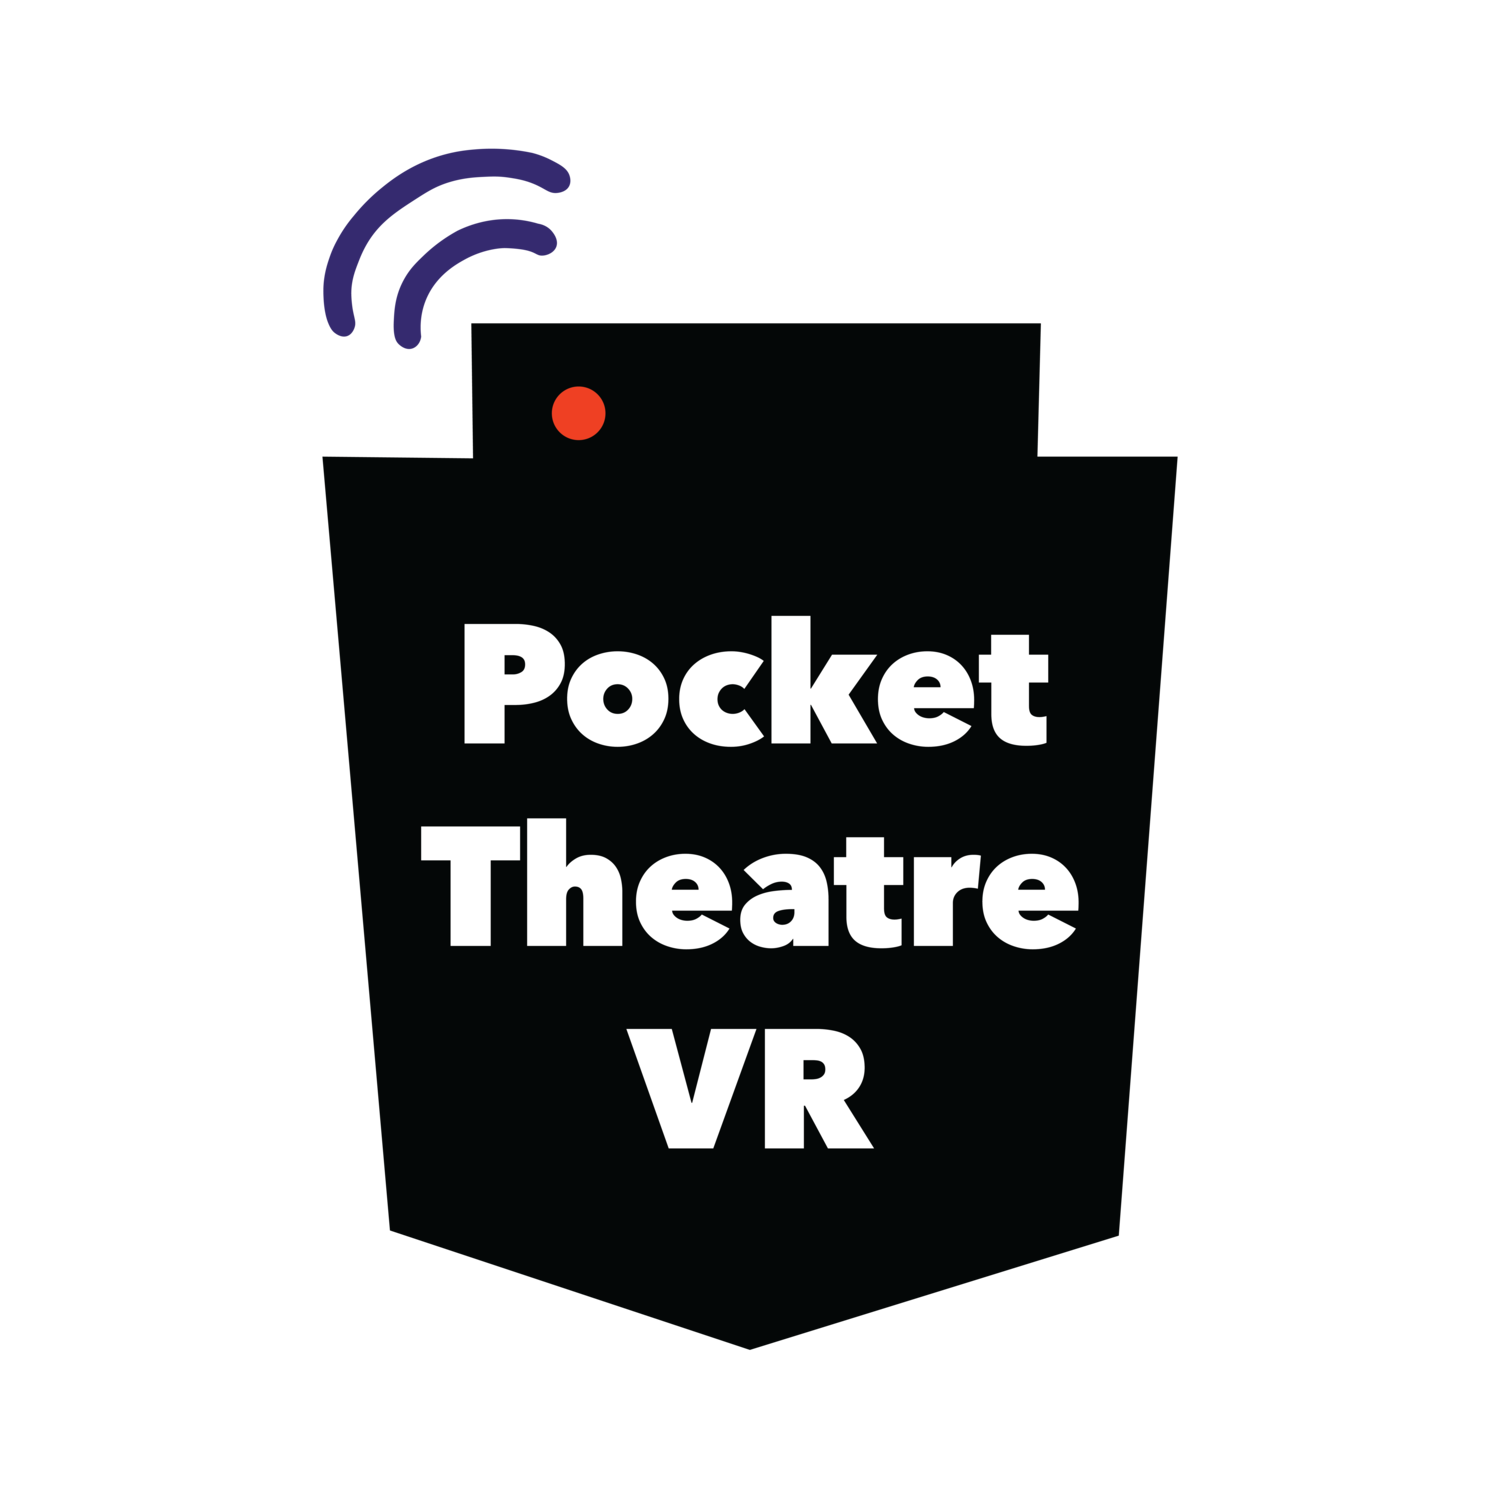 Pocket Theatre VR